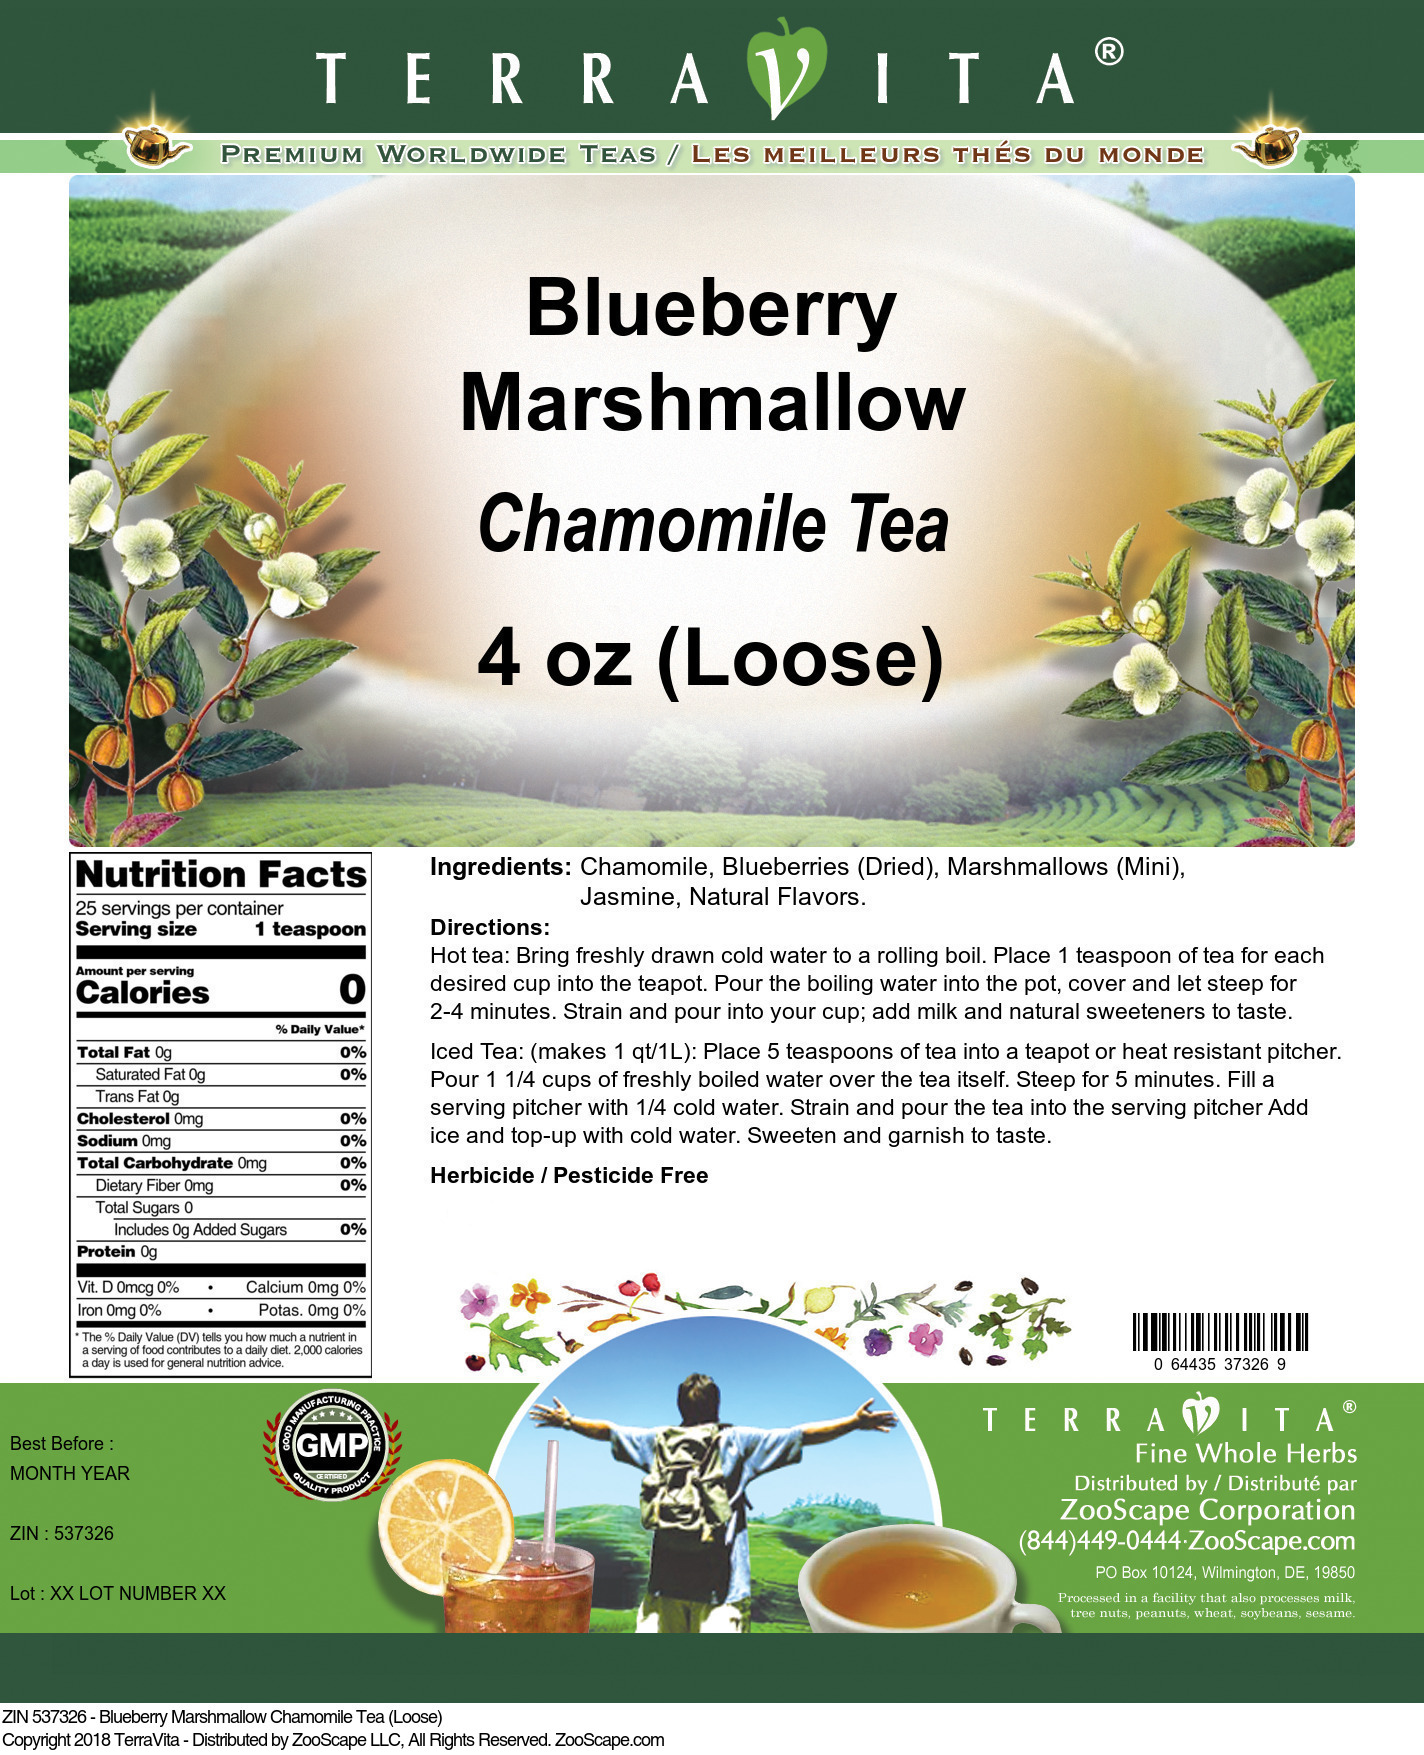 Blueberry Marshmallow Chamomile Tea (Loose) - Label